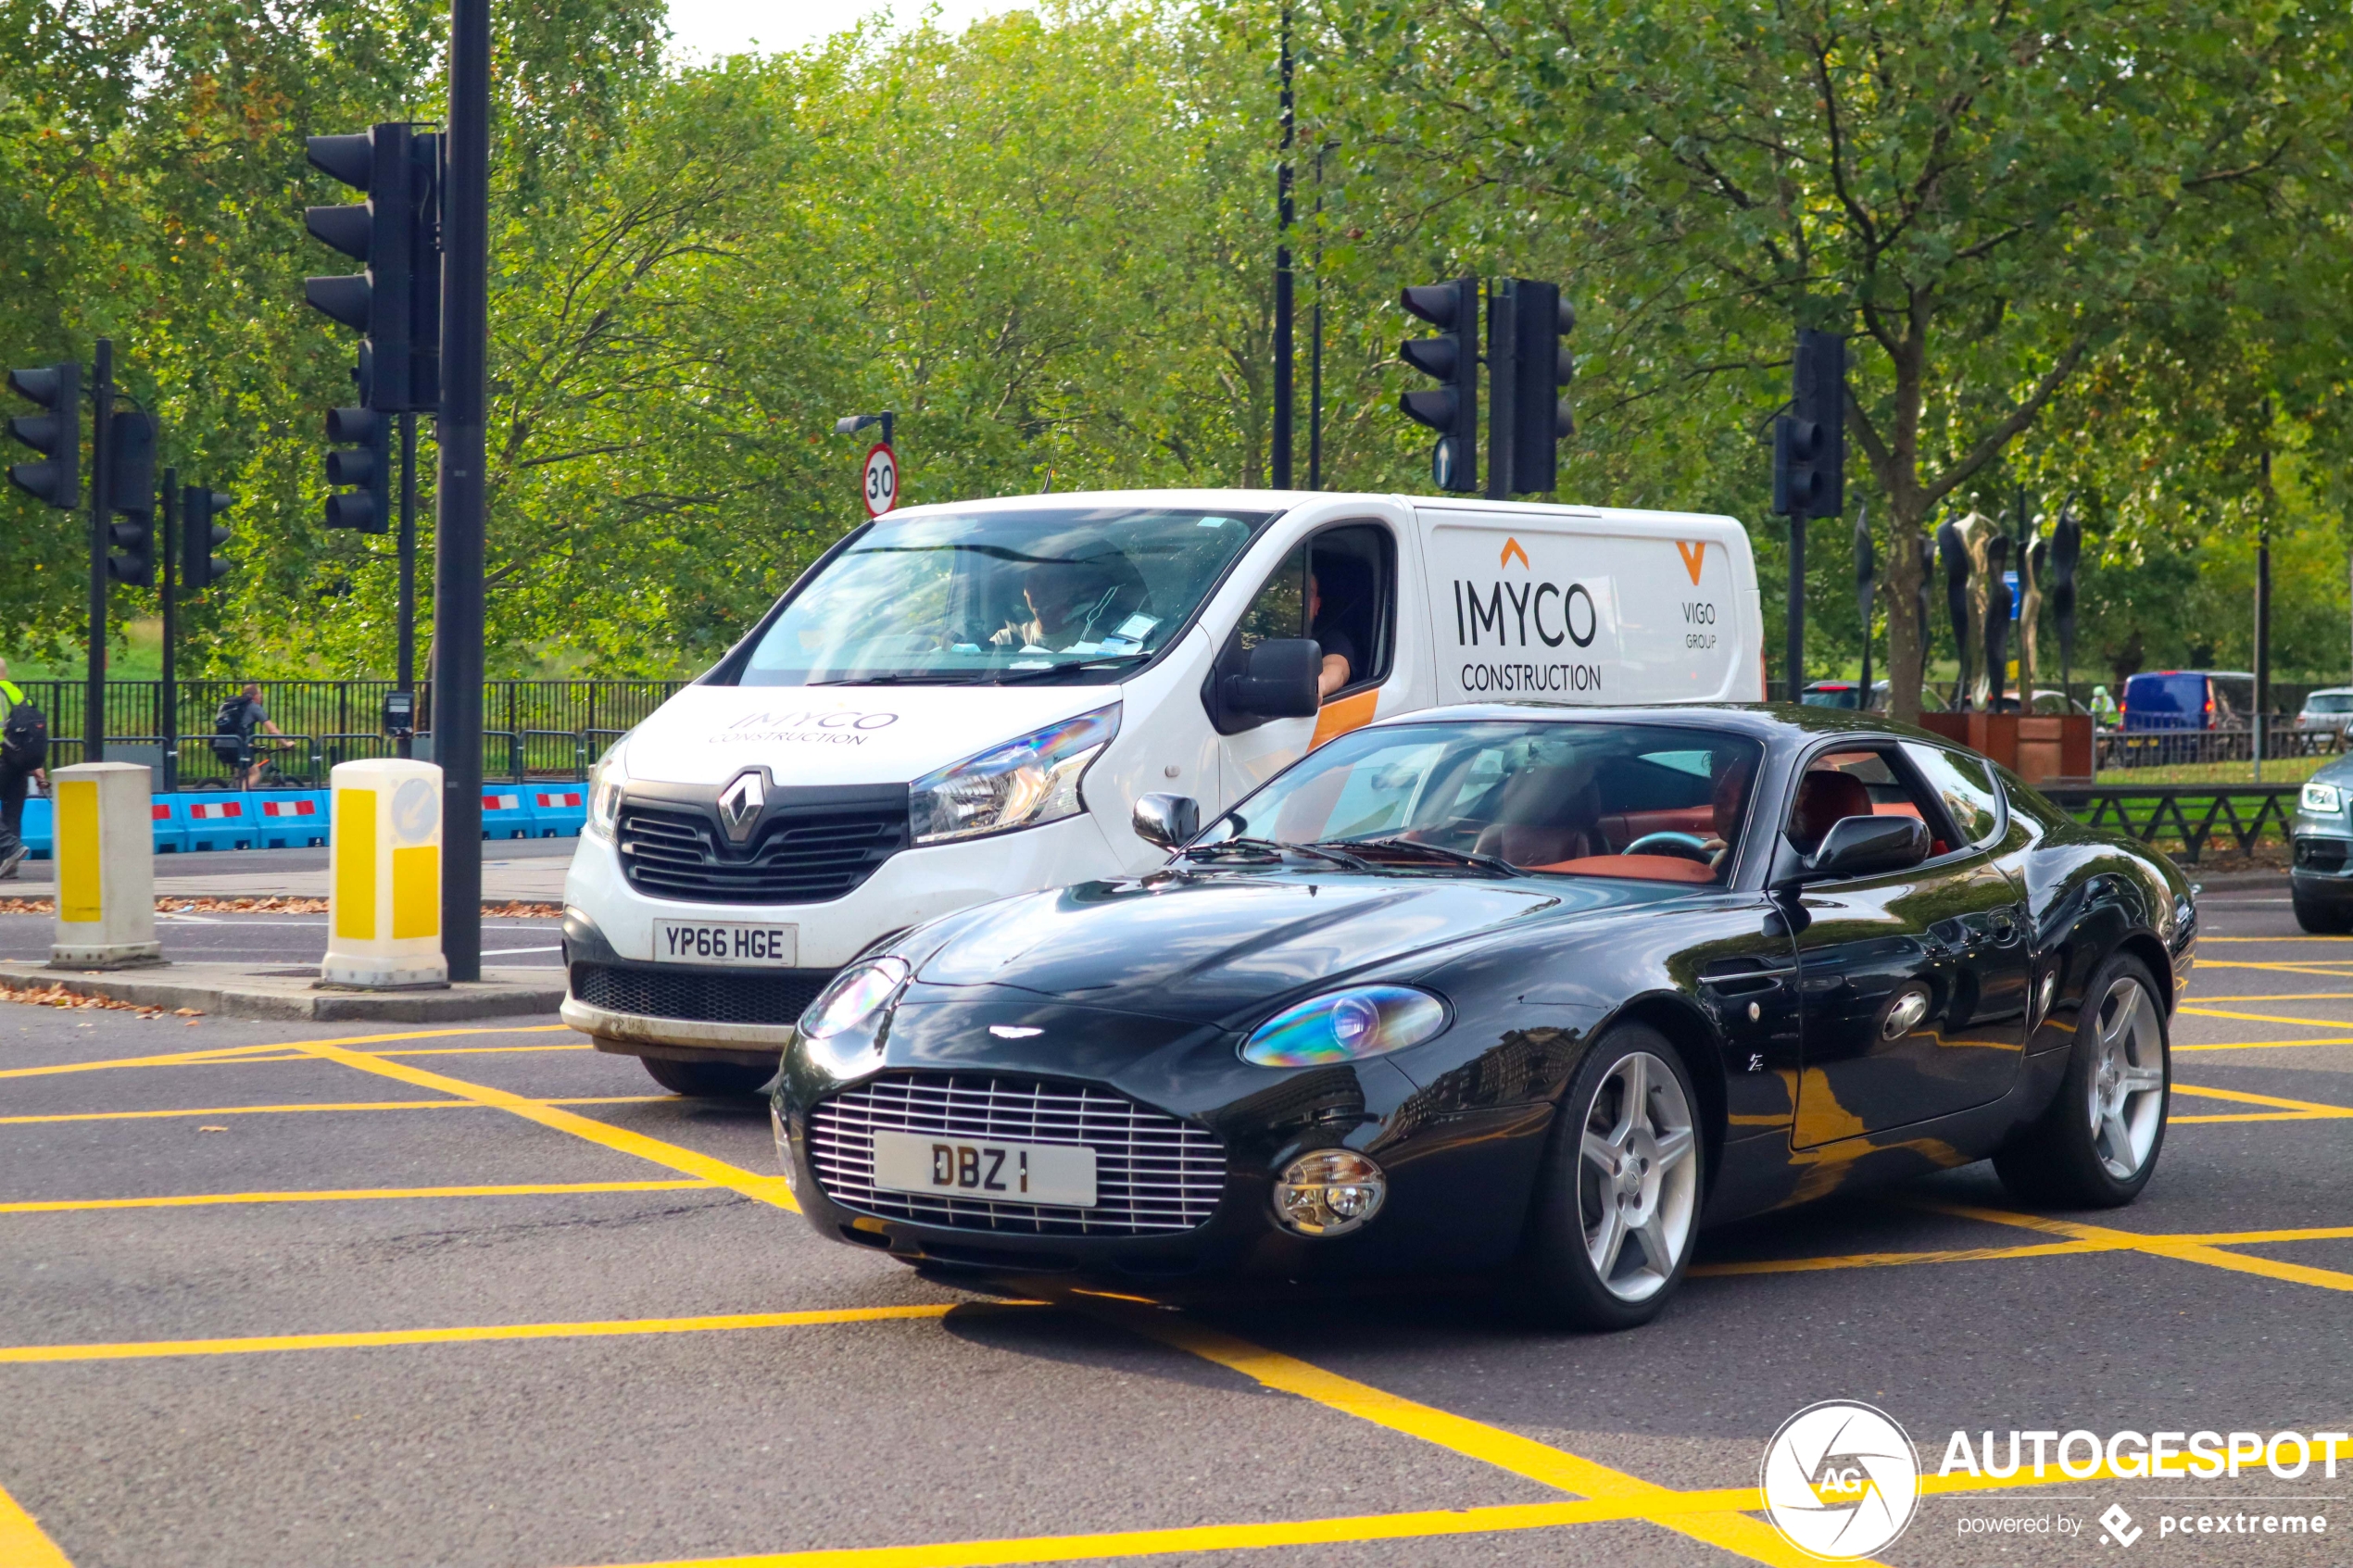 Aston Martin DB7 Zagato mengt zich in Londens stadsverkeer